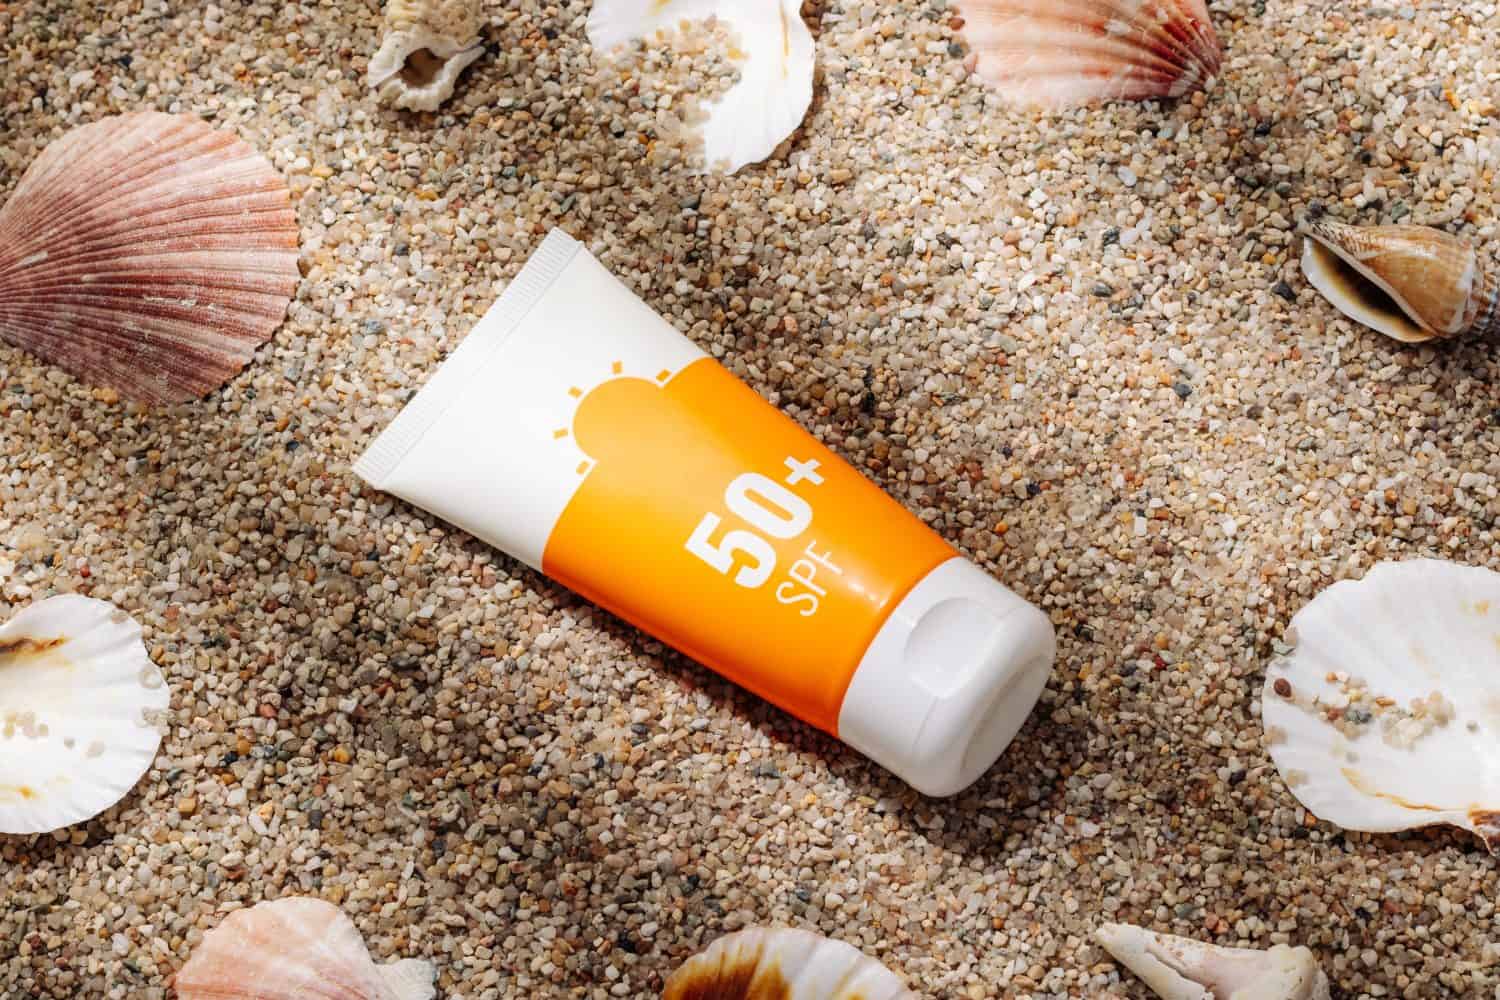 Orange tube of sunscreen on sandy beach top view